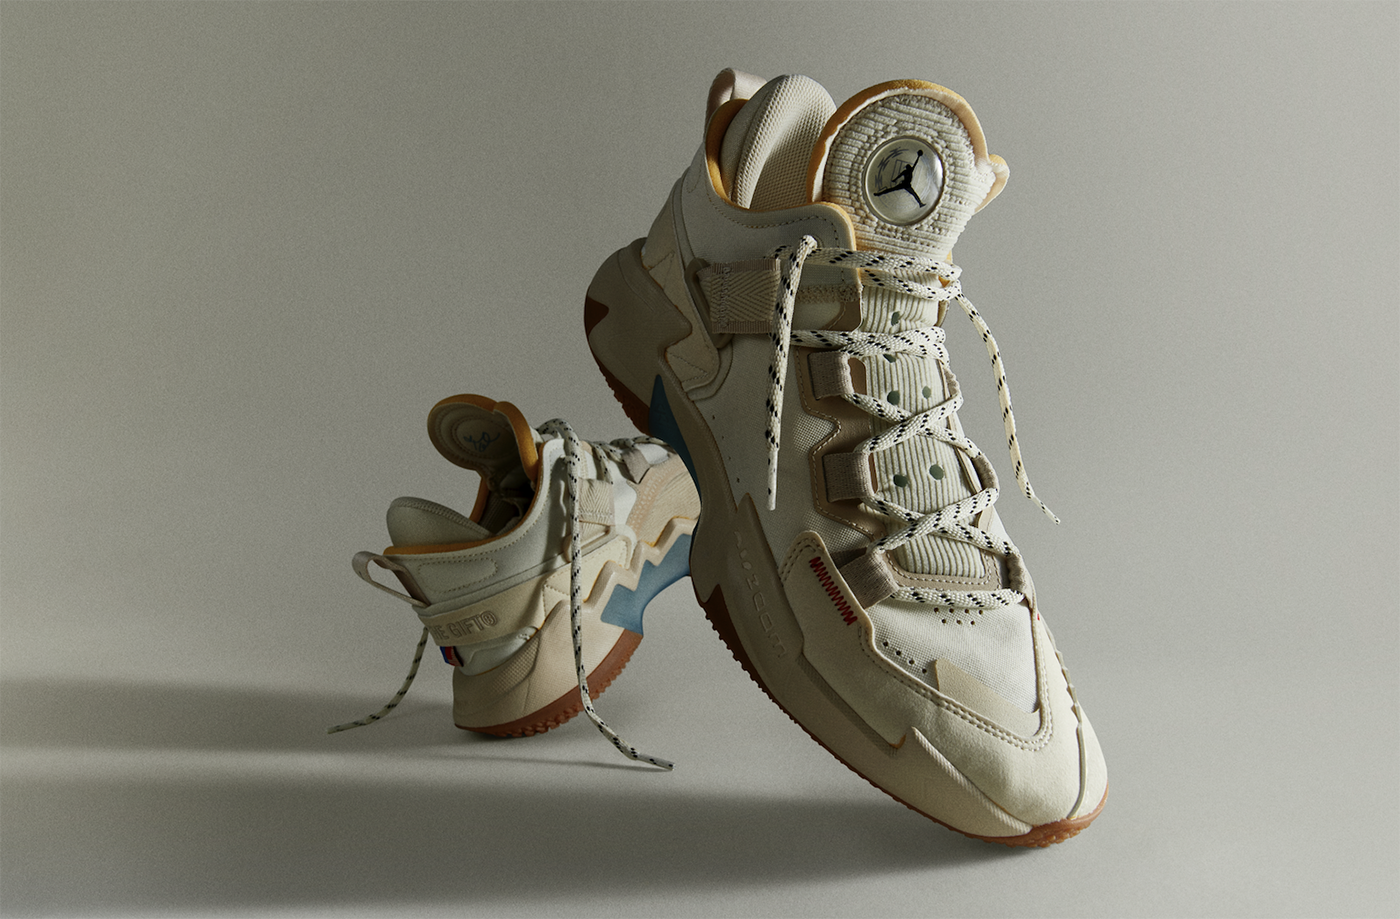 Your Best Look Yet at Russell Westbrook's Air Jordan Sig Shoe